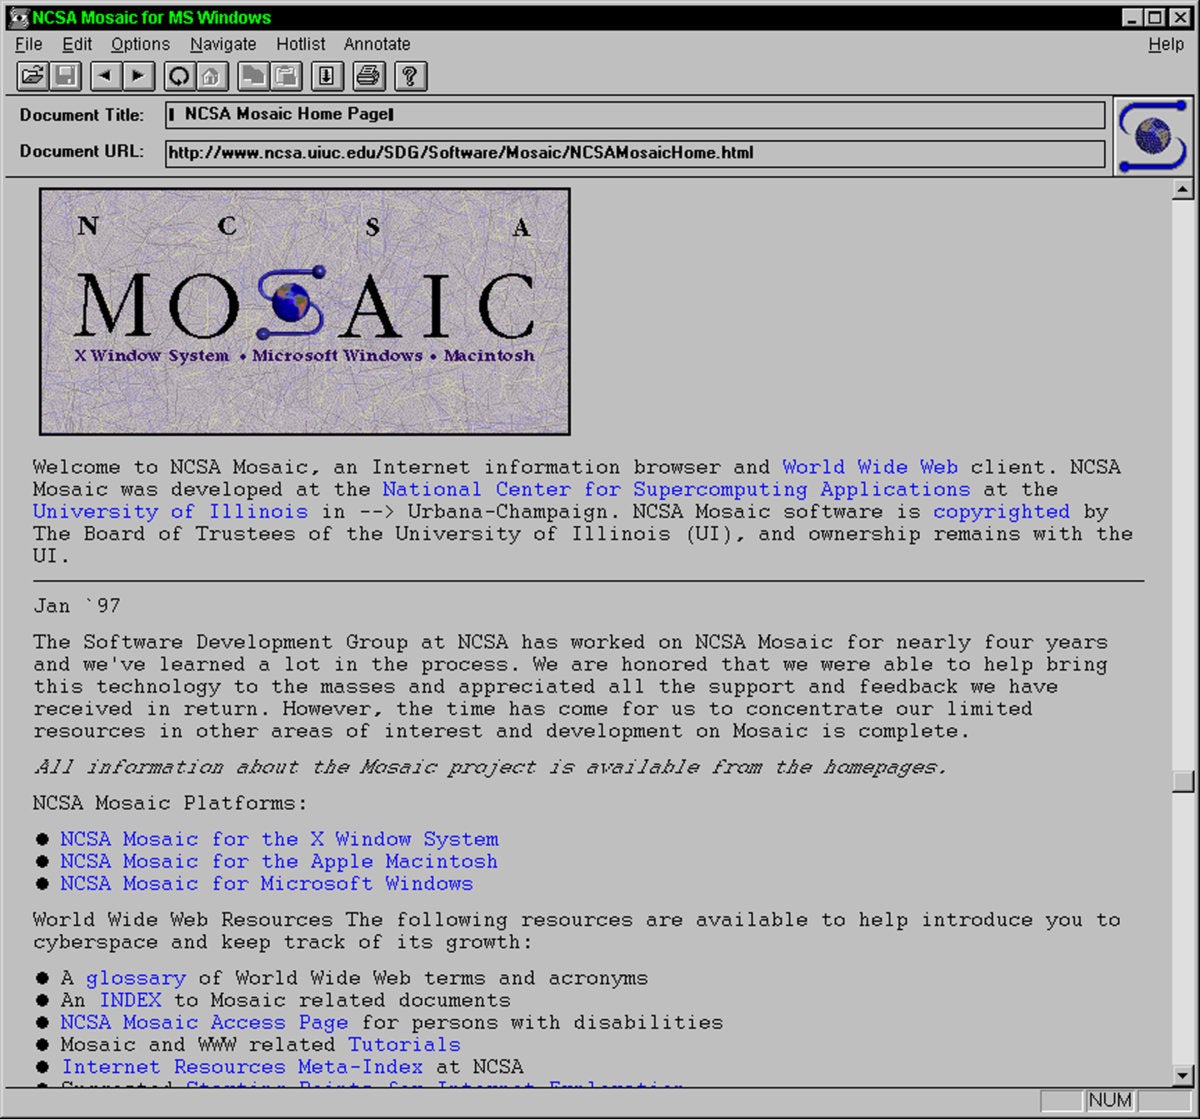 mosaic web browser